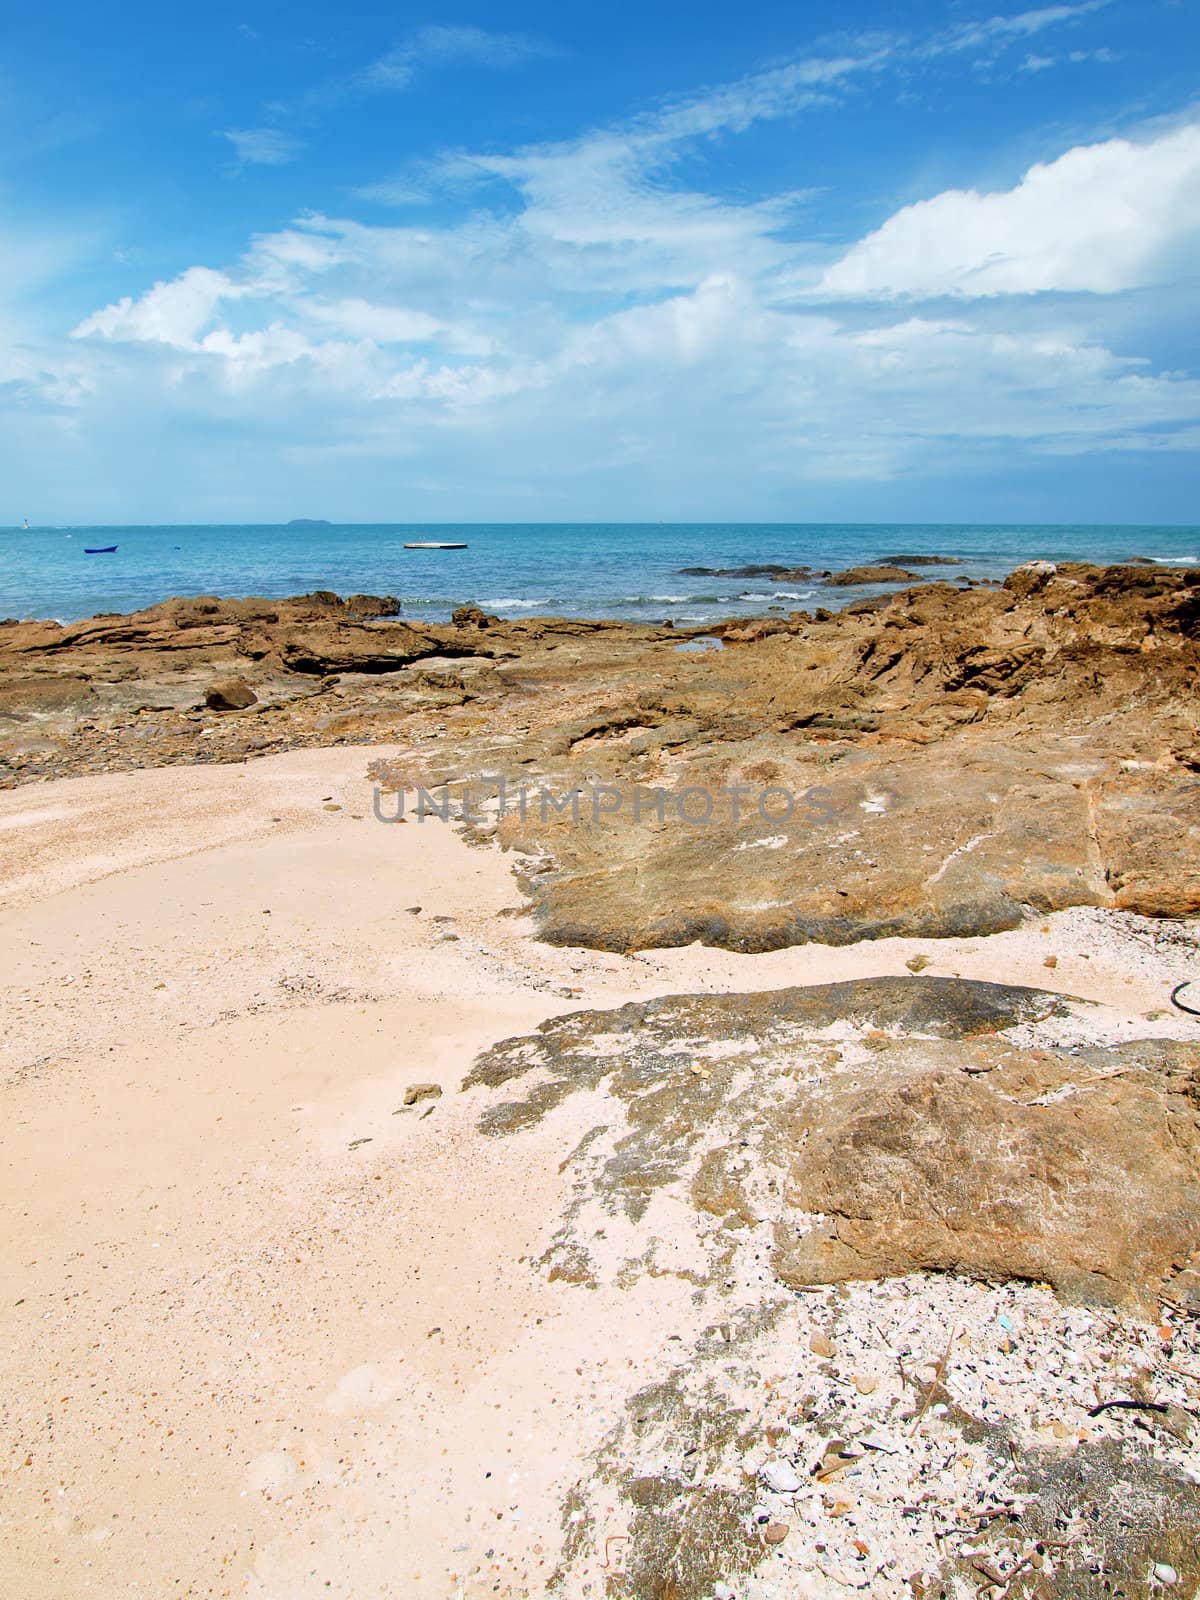 Thai island of Koh Samed. The pile of rocks on the beach